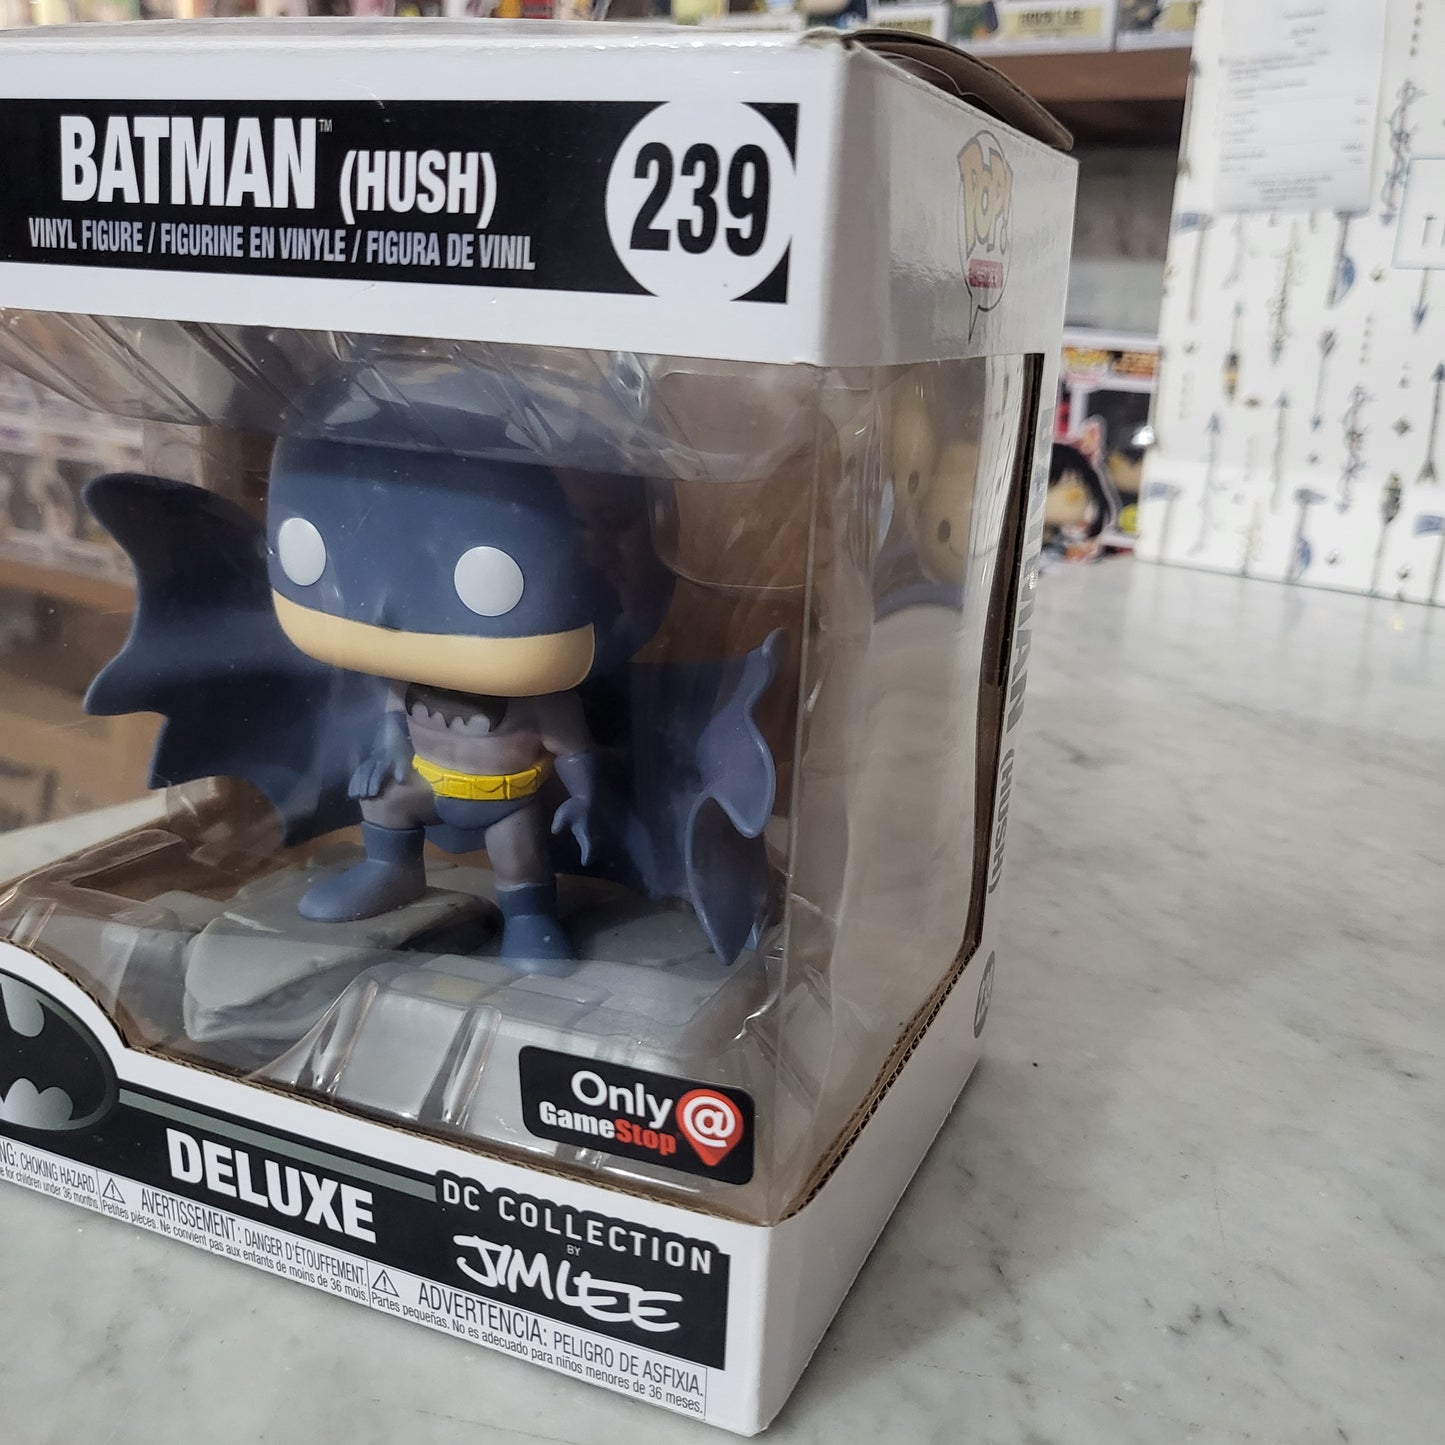 DC - Batman [Deluxe Gamestop Exclusive Jim Lee] [Damaged Box] #239